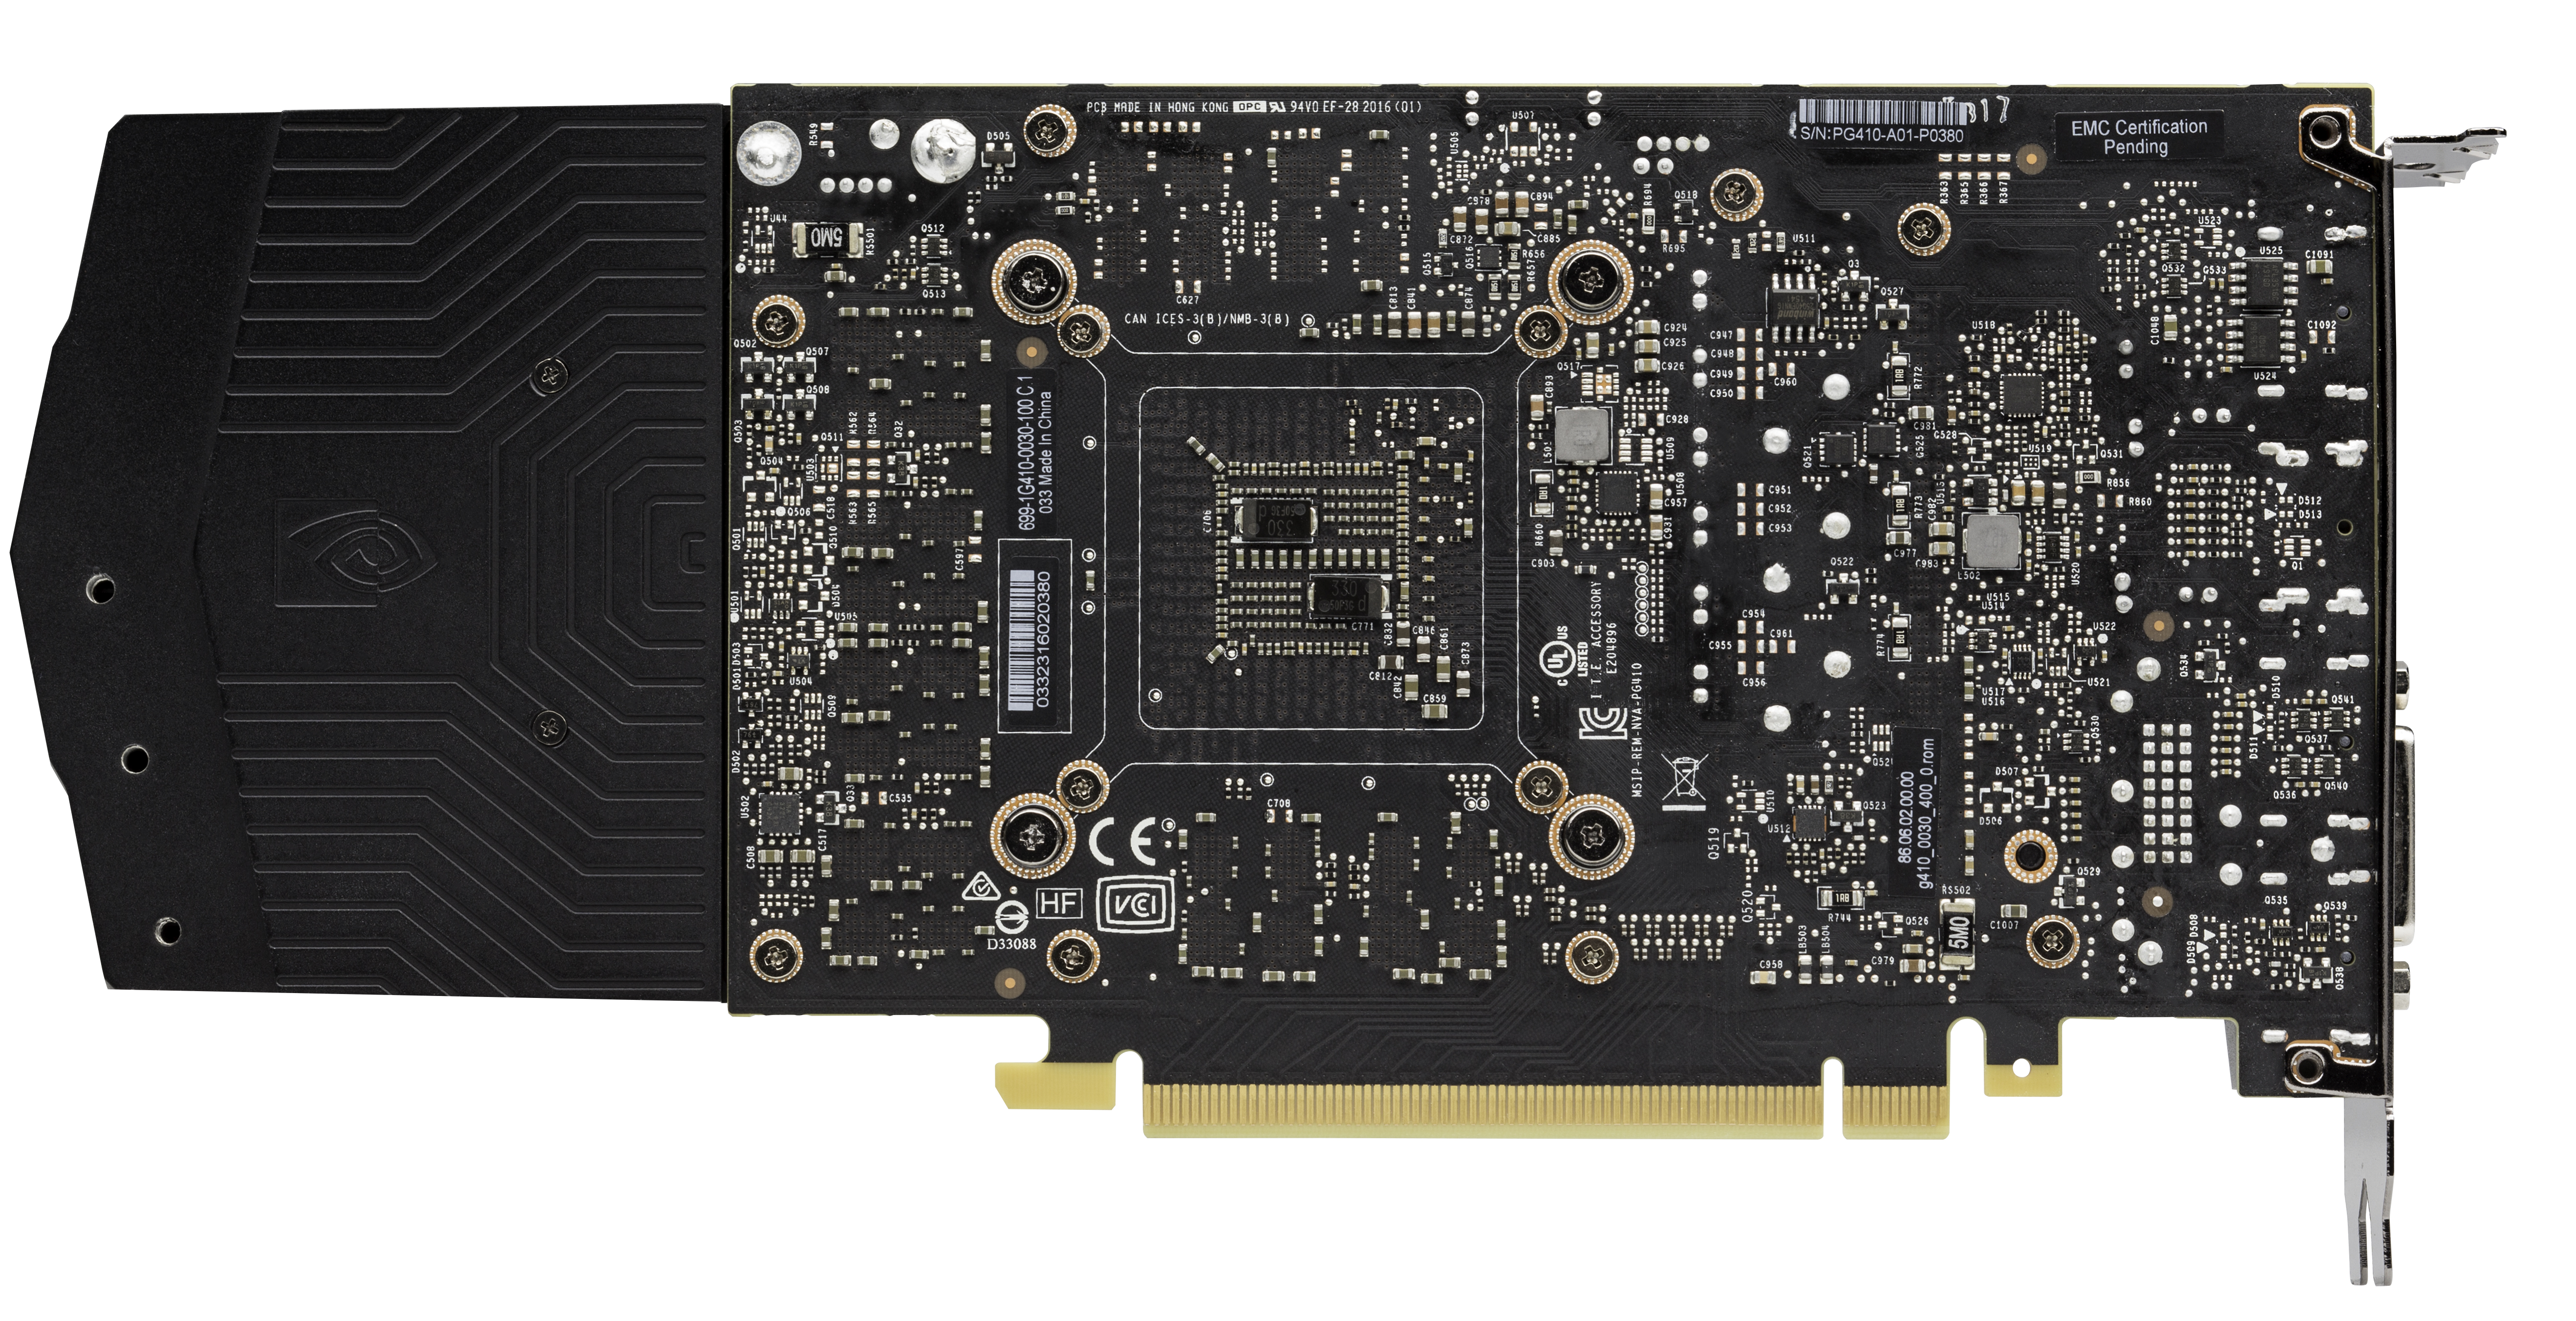 Meet the GeForce GTX 1060 Founders Edition The GeForce GTX 1060